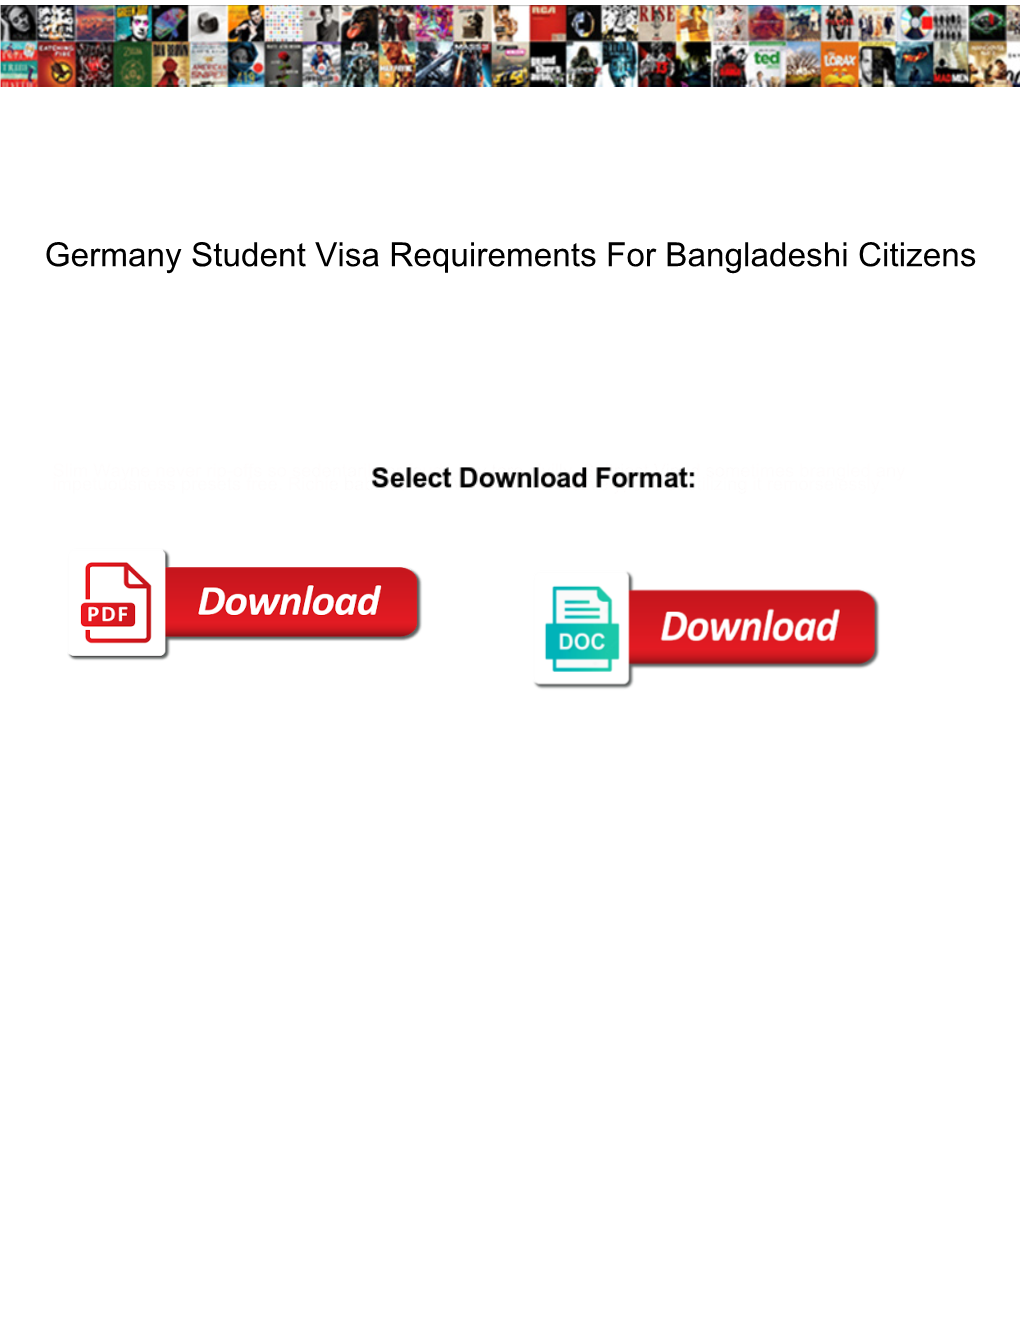 Germany Student Visa Requirements for Bangladeshi Citizens